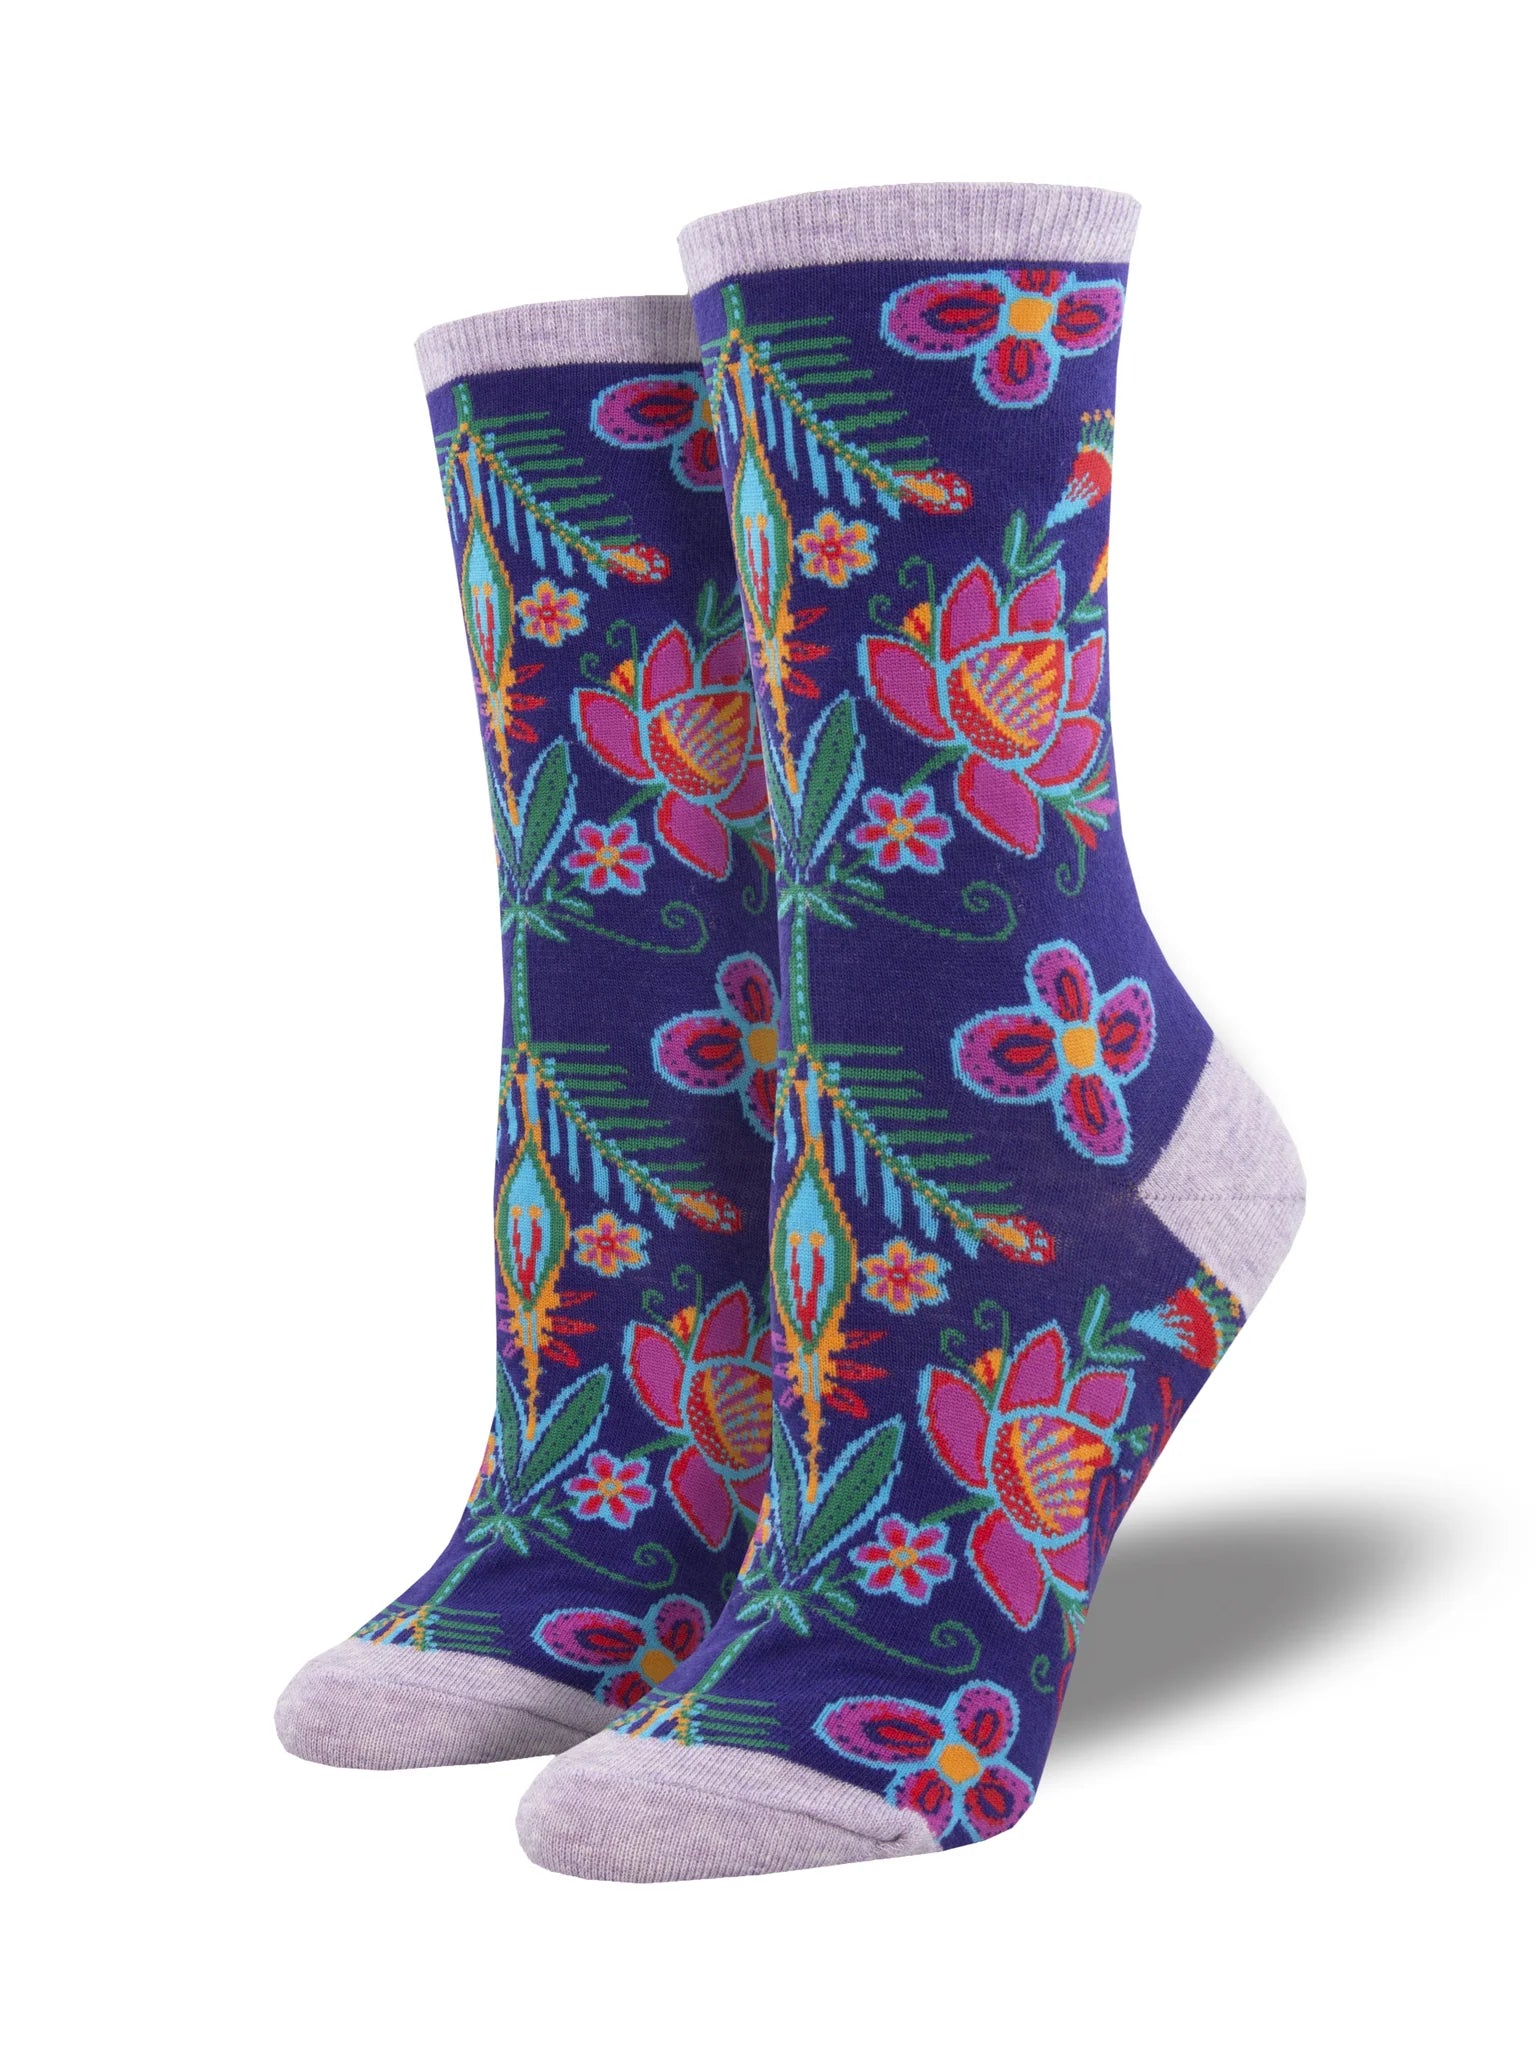 Alyssa Floral Laurel Burch Women's Socks